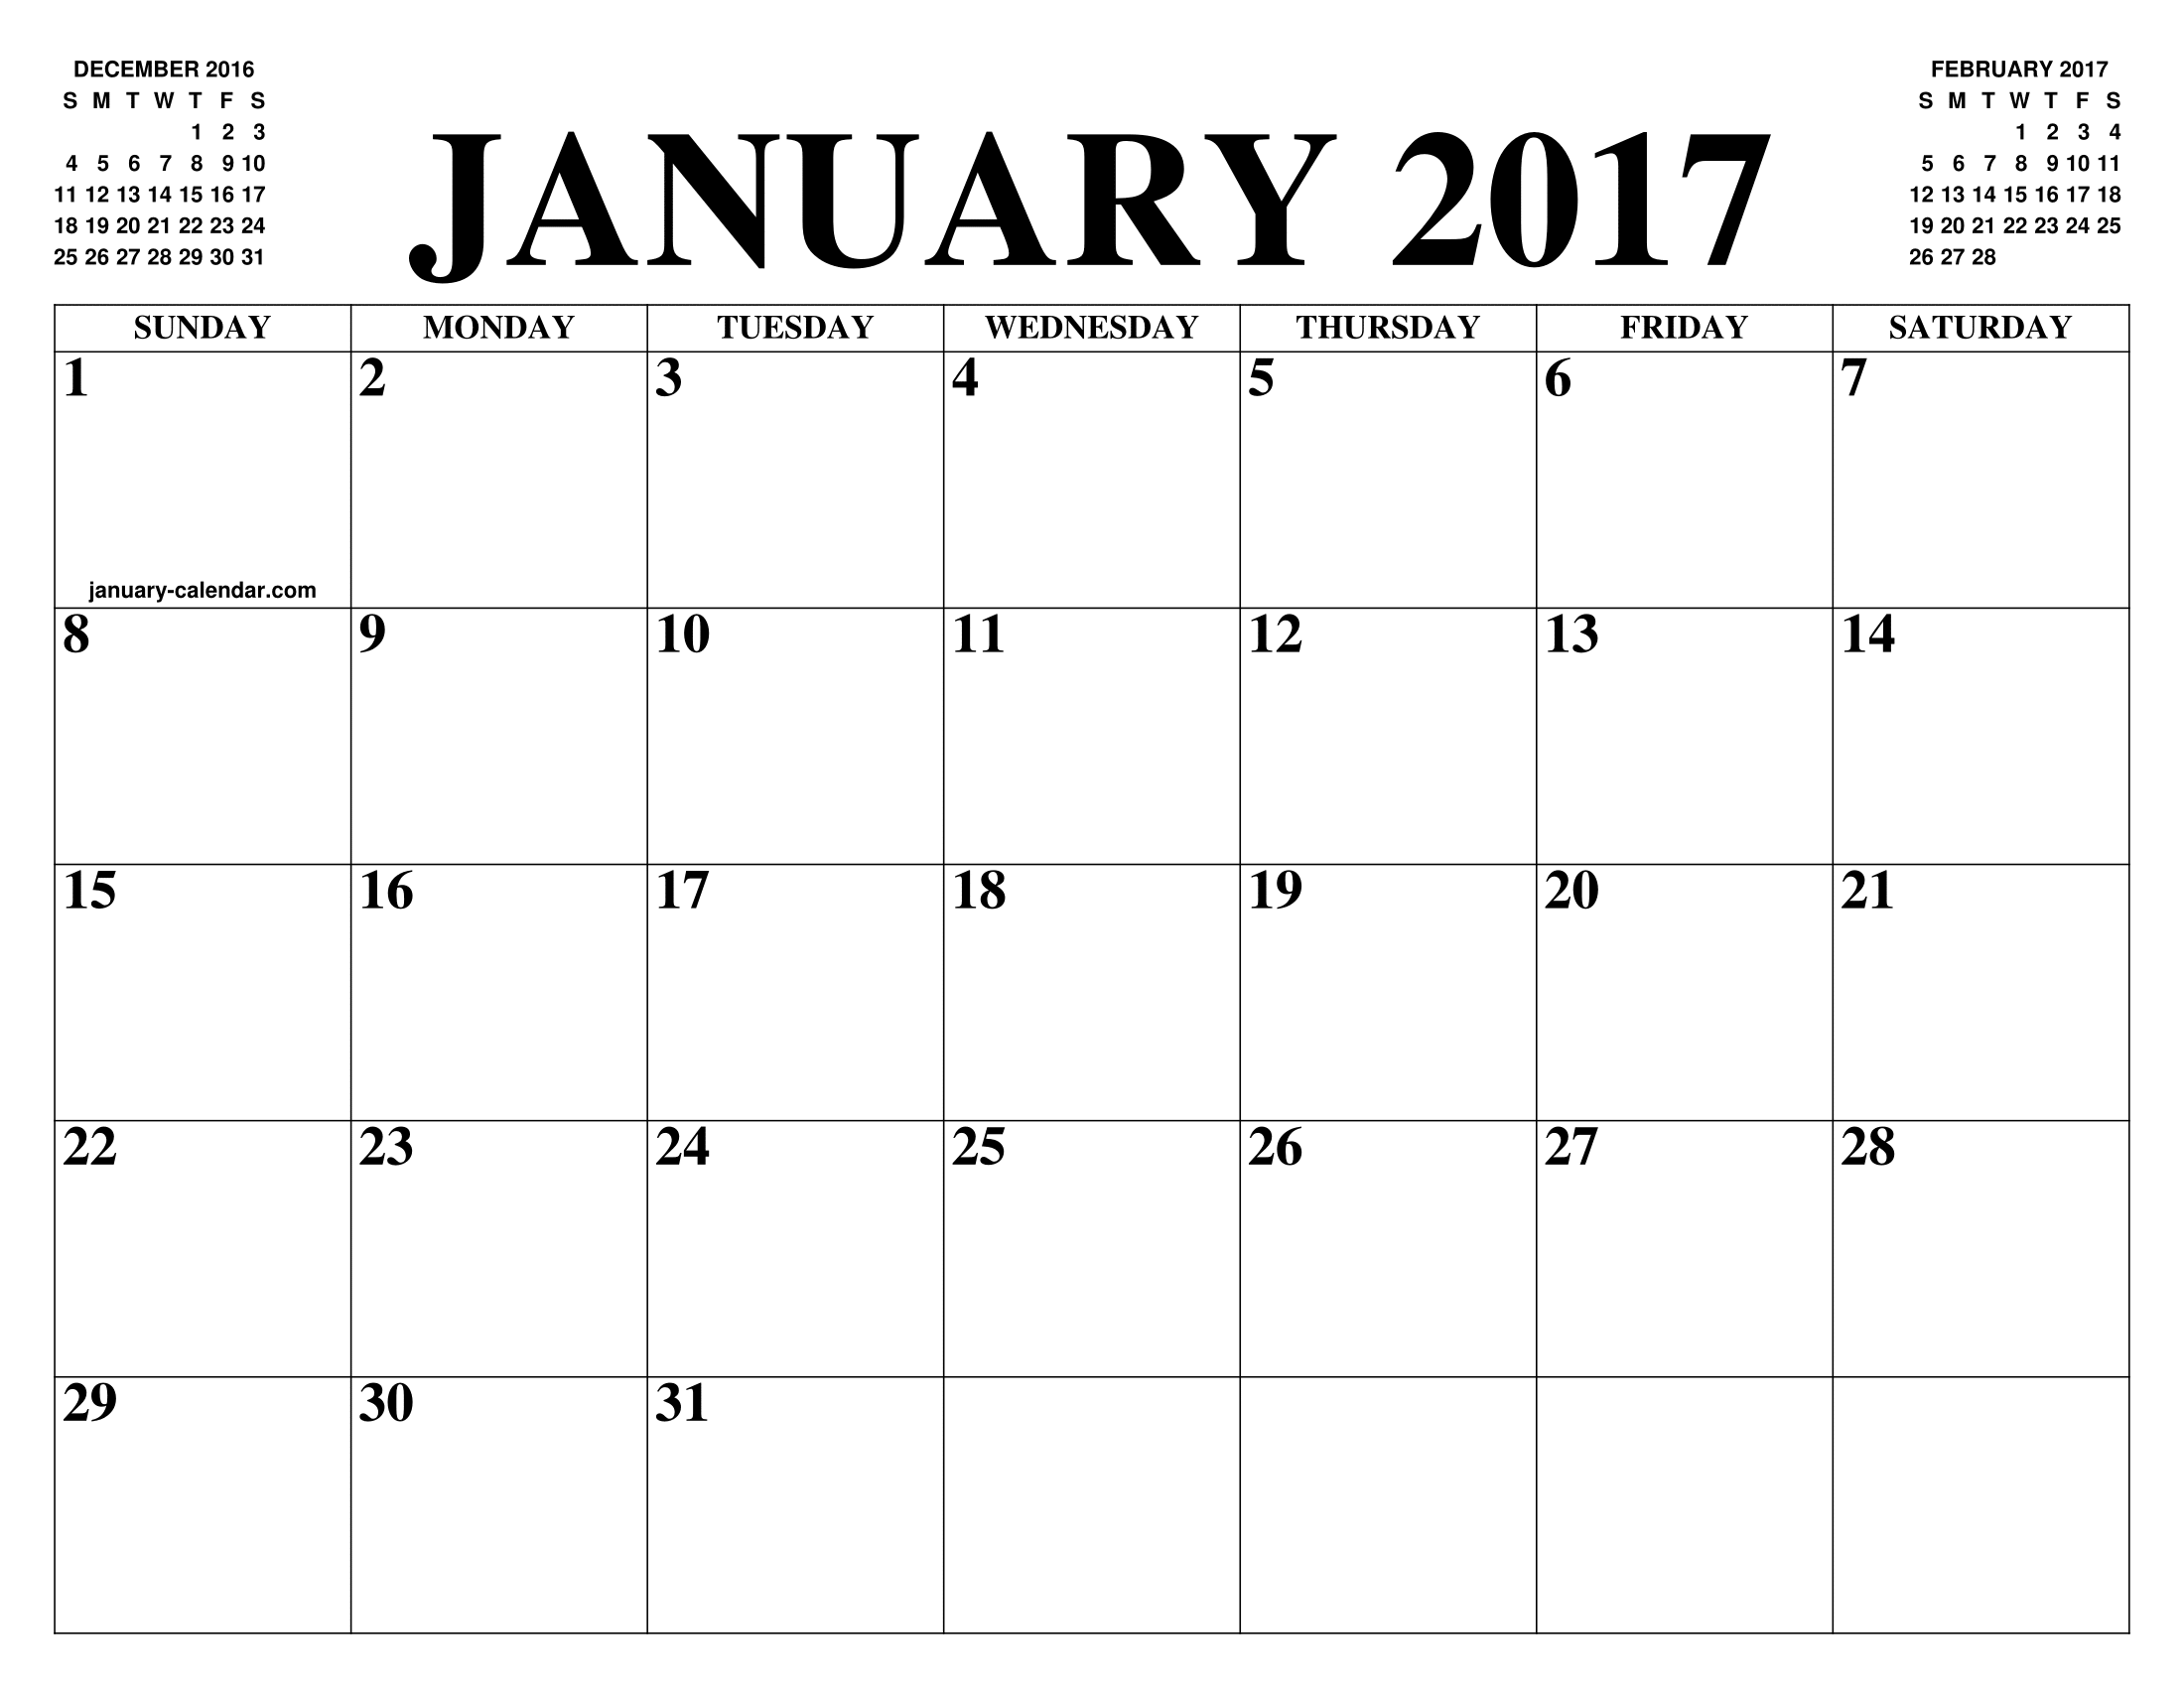 JANUARY 2017 2018 CALENDAR OF THE MONTH: FREE PRINTABLE JANUARY 2017